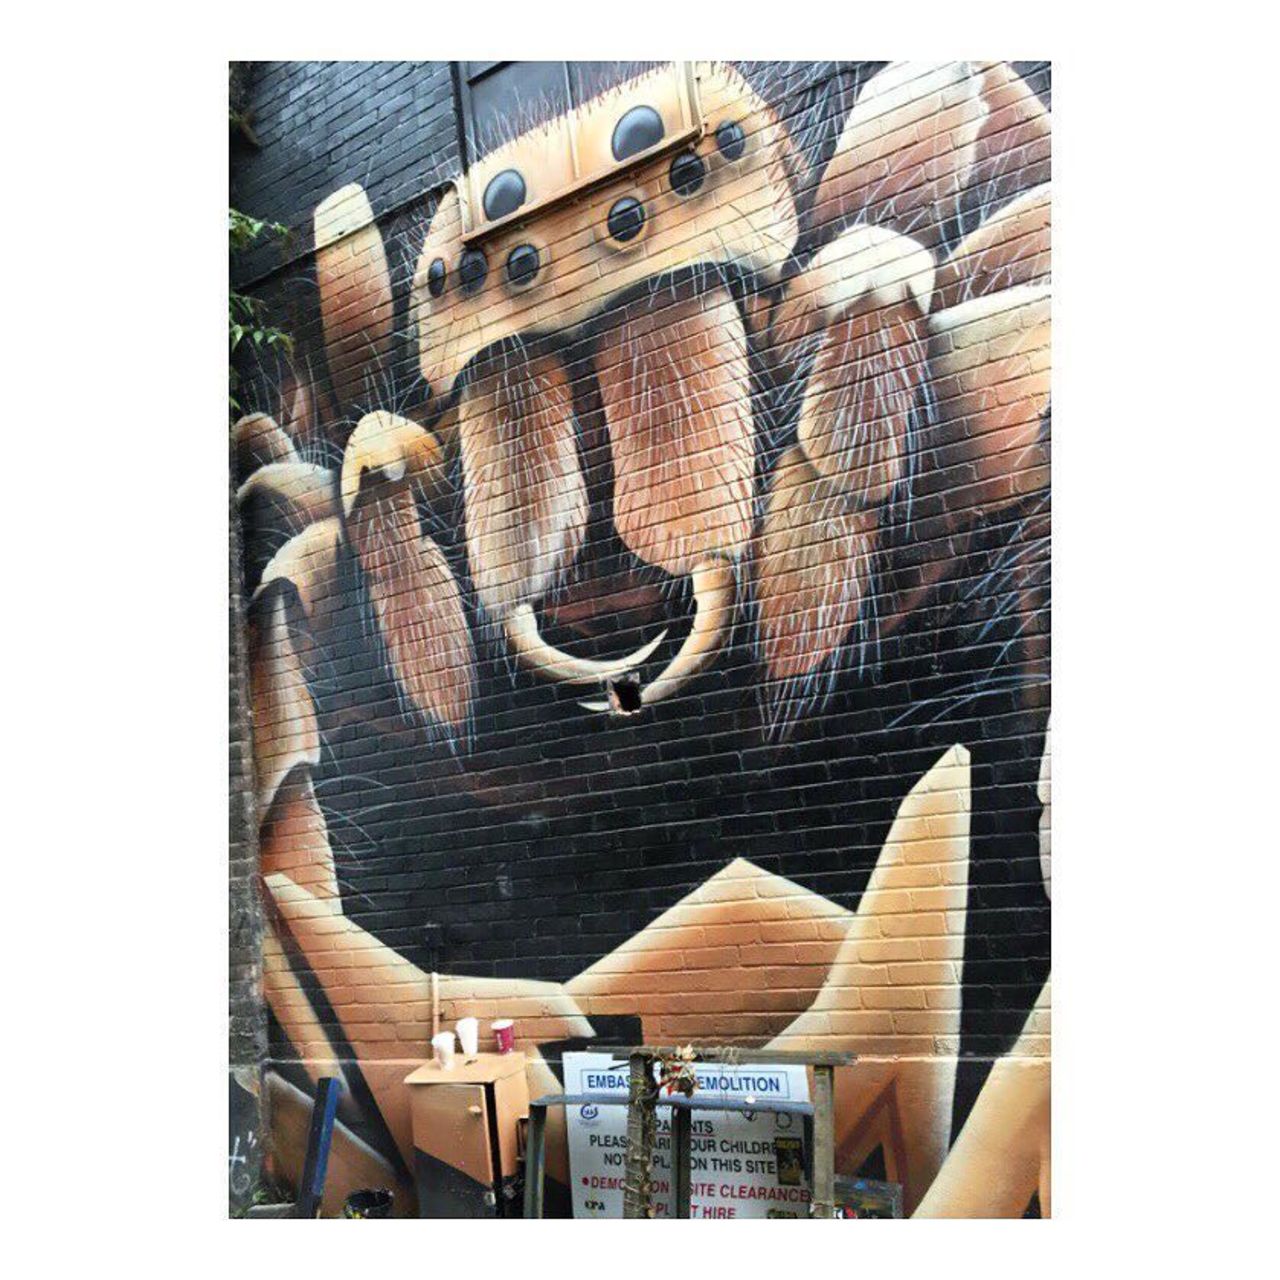 Coming to tickle youuu  #halloweenspirit #streetart #graffiti #spider #mural #wallmural #spraypaint #paint #stenci… https://t.co/EQBaXMehCN